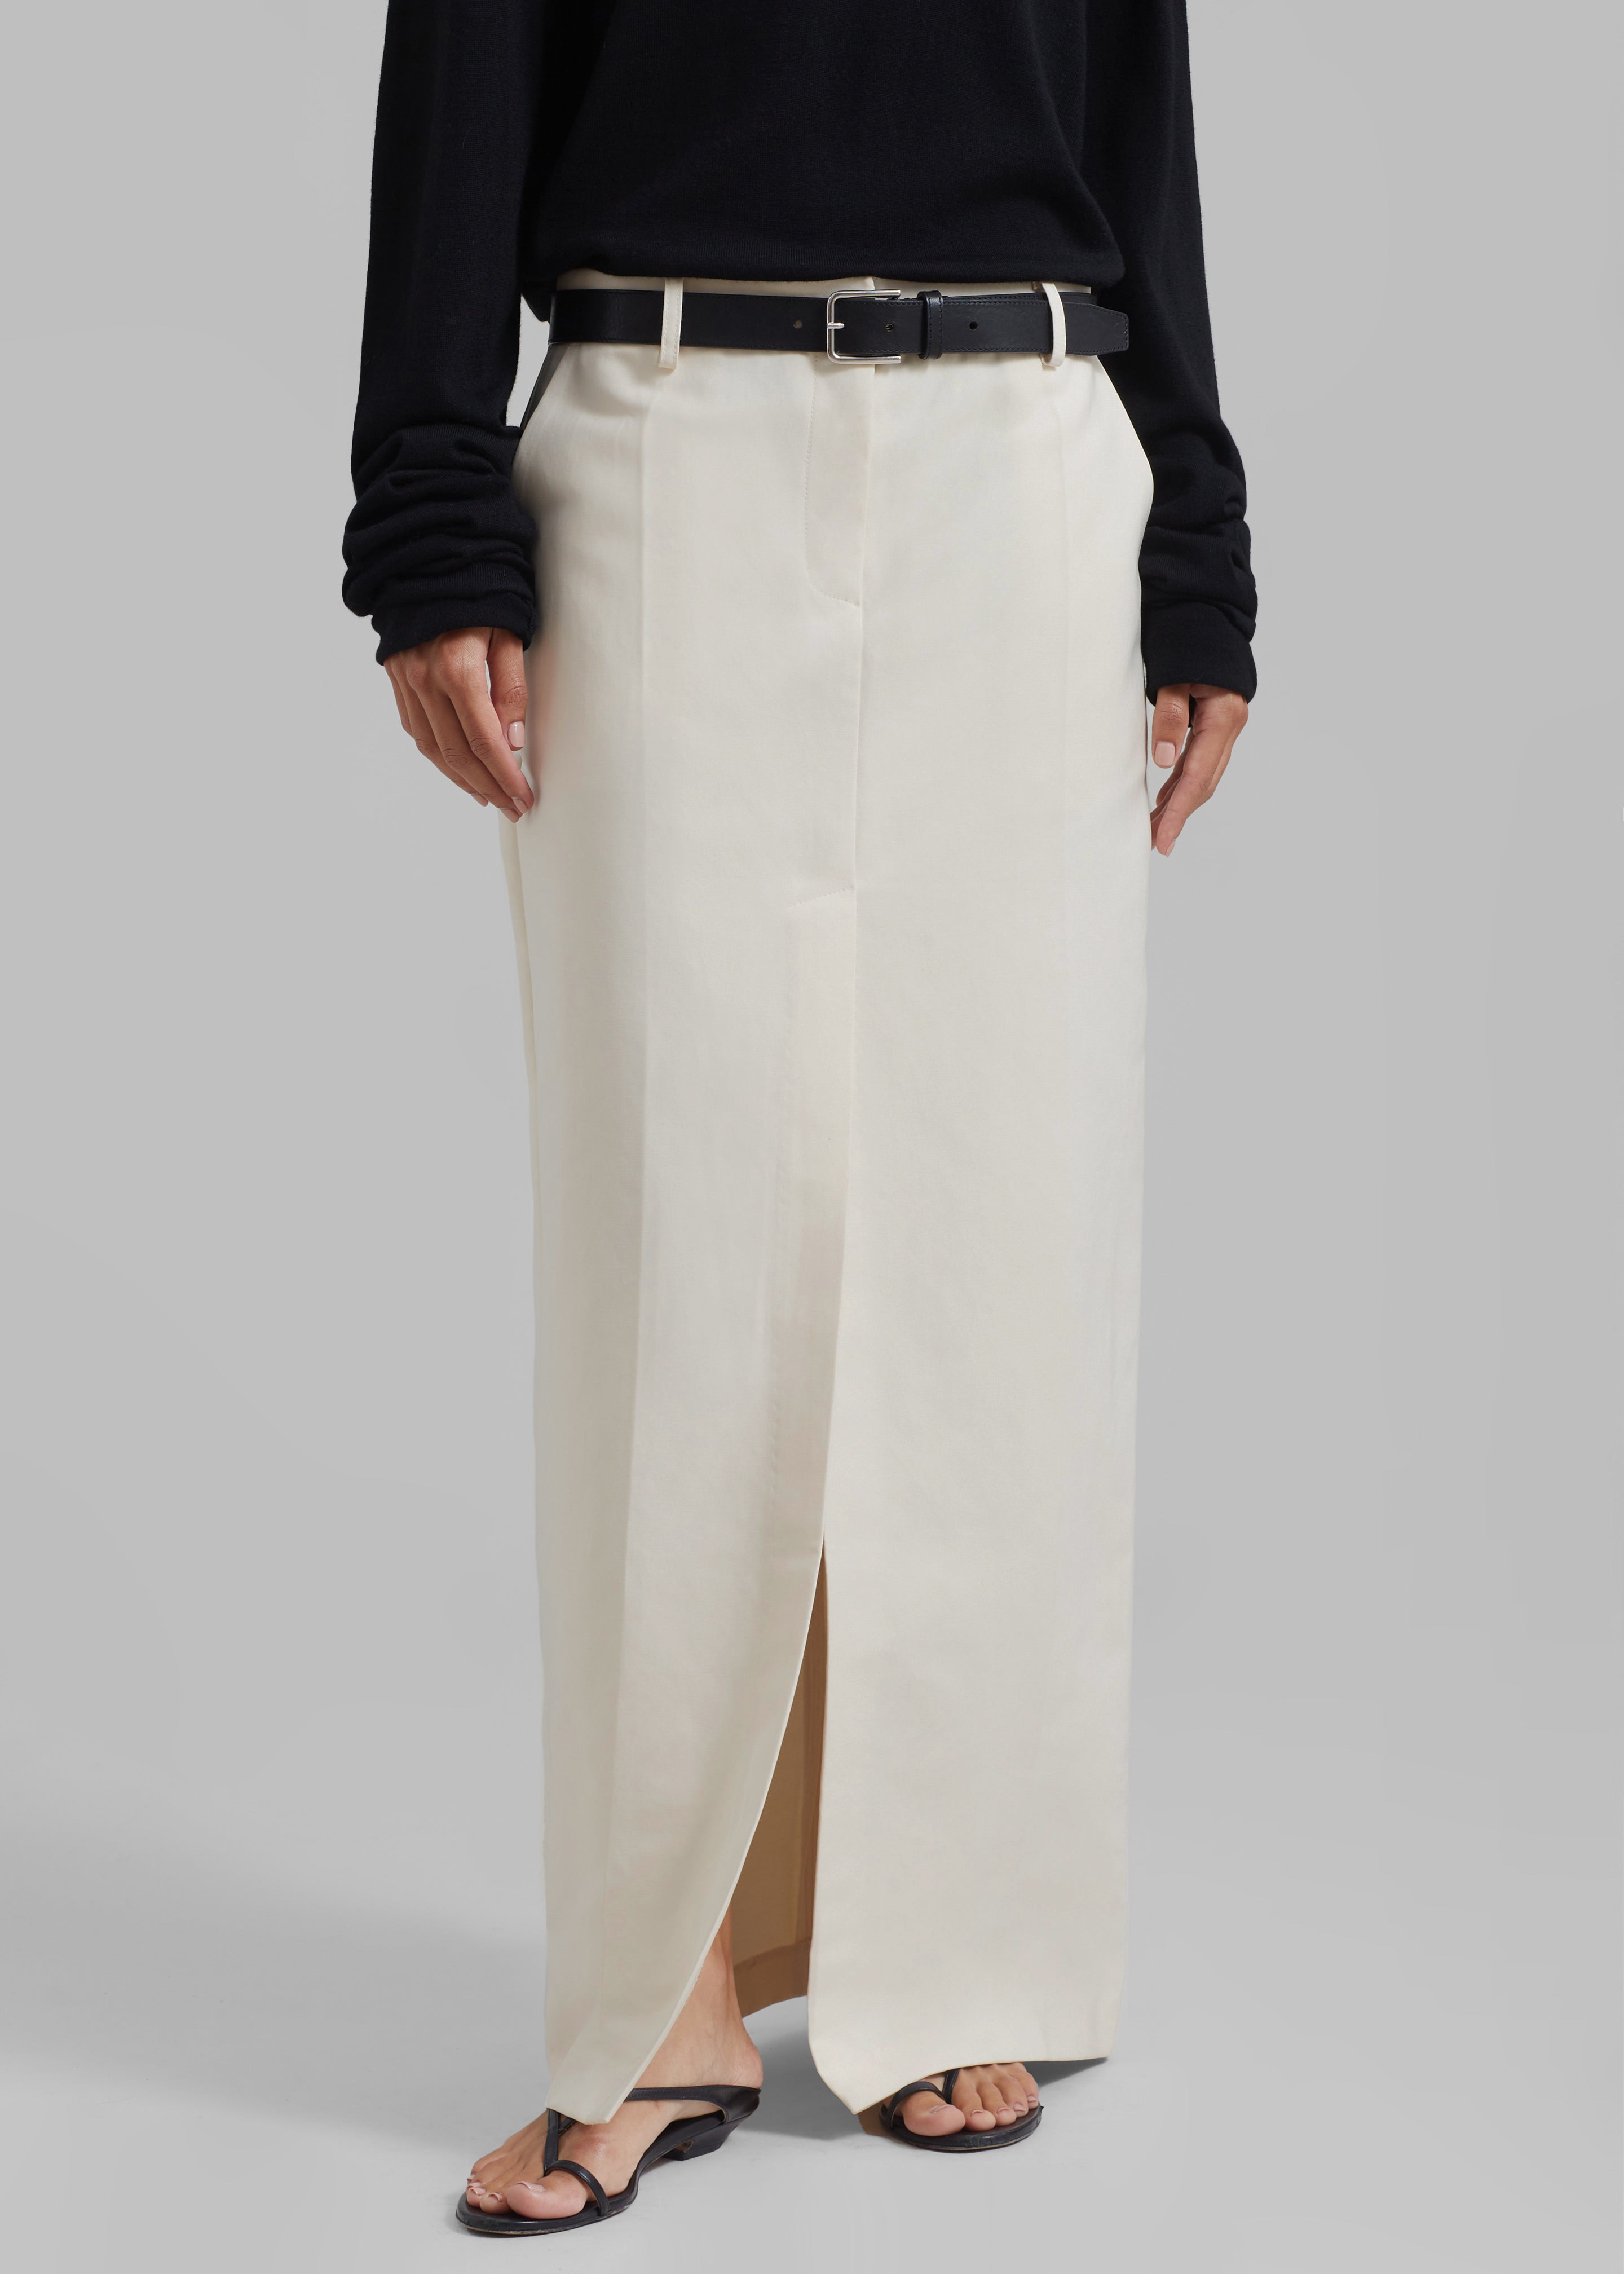 Carley Long Skirt - Cream - 3